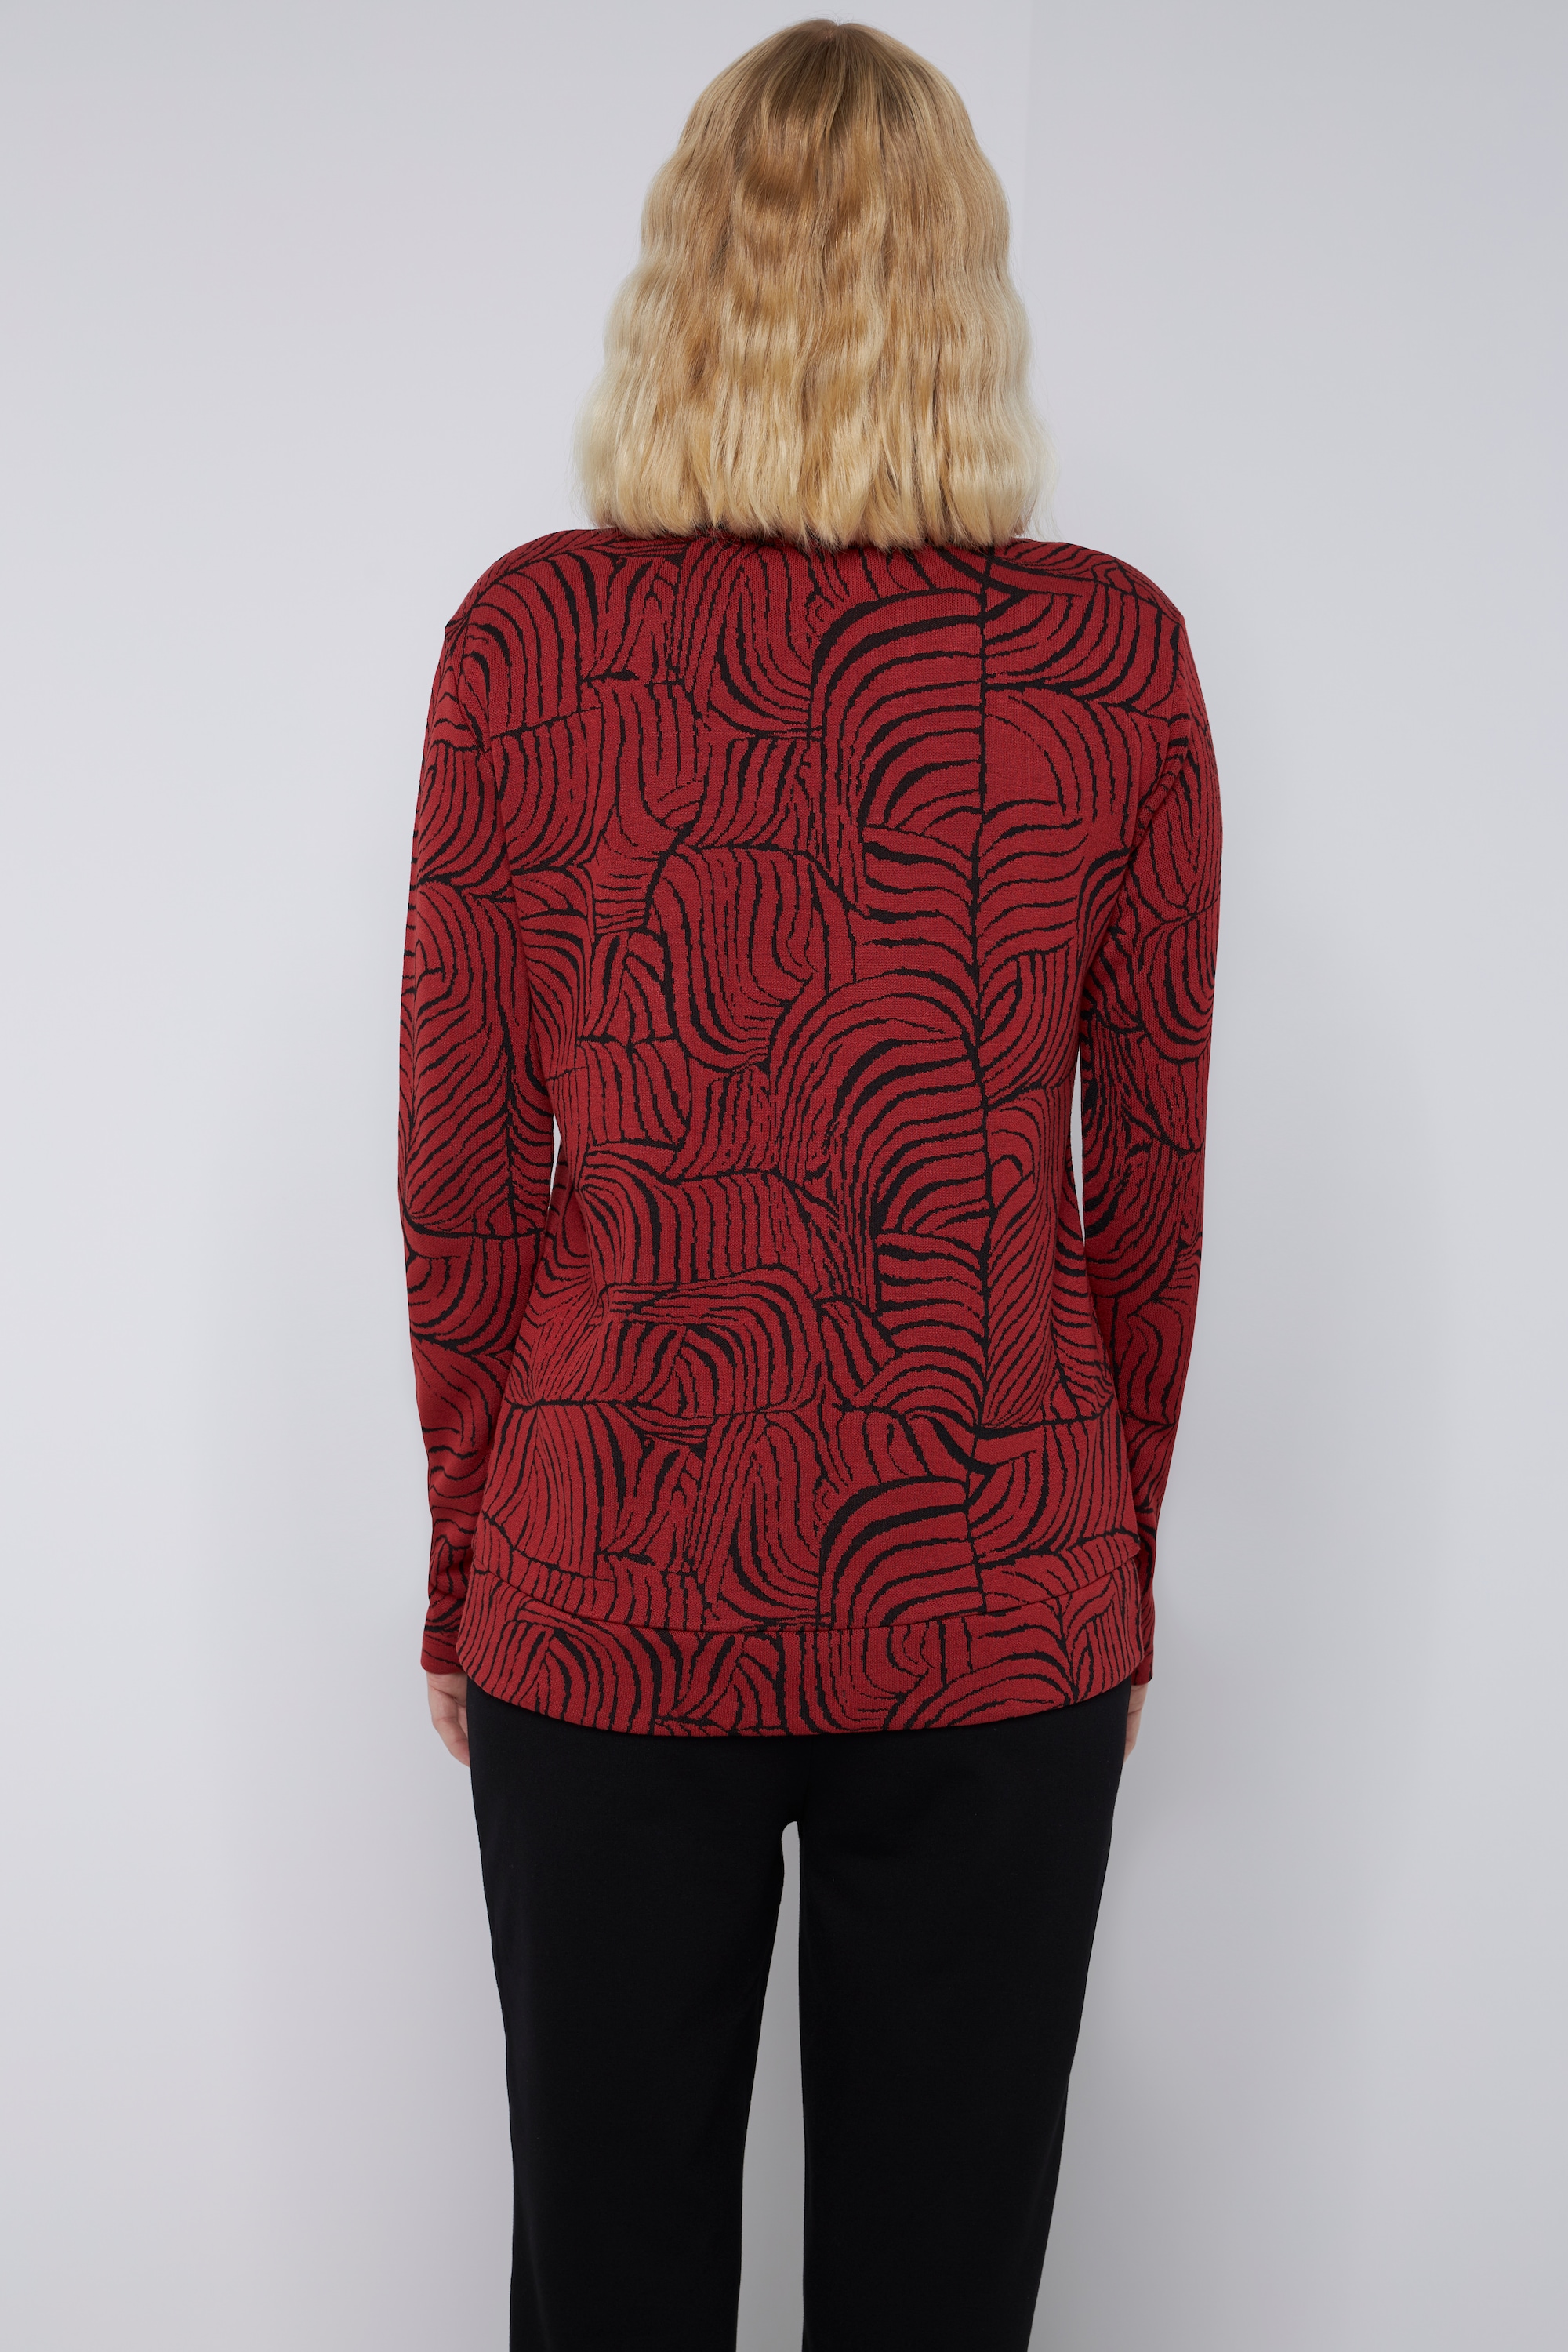 Gina Laura Damen Sweatshirt Jacquard Muster Tunika Ausschnitt Langarm 816423